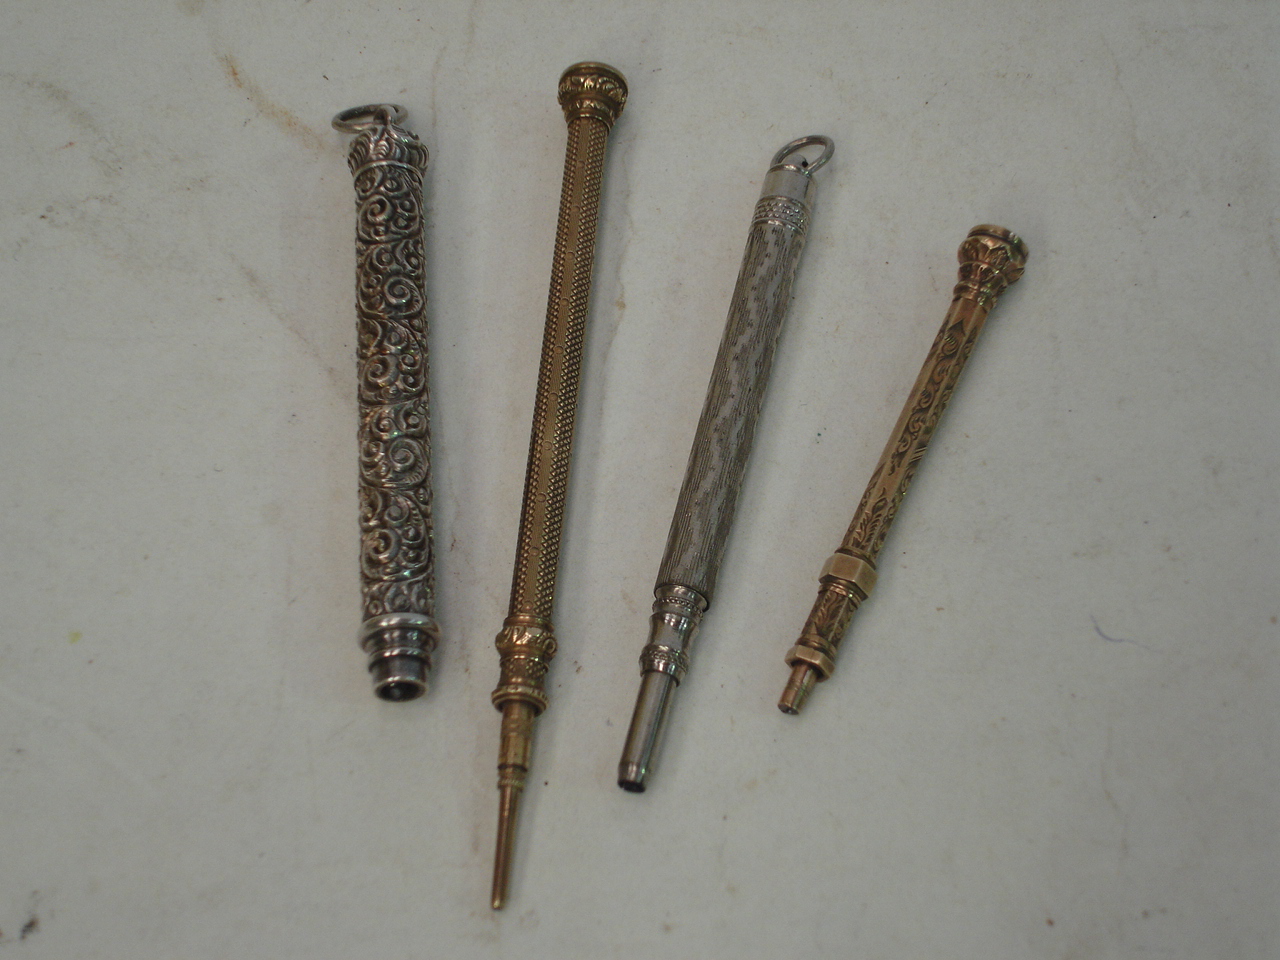 Four propelling pencils